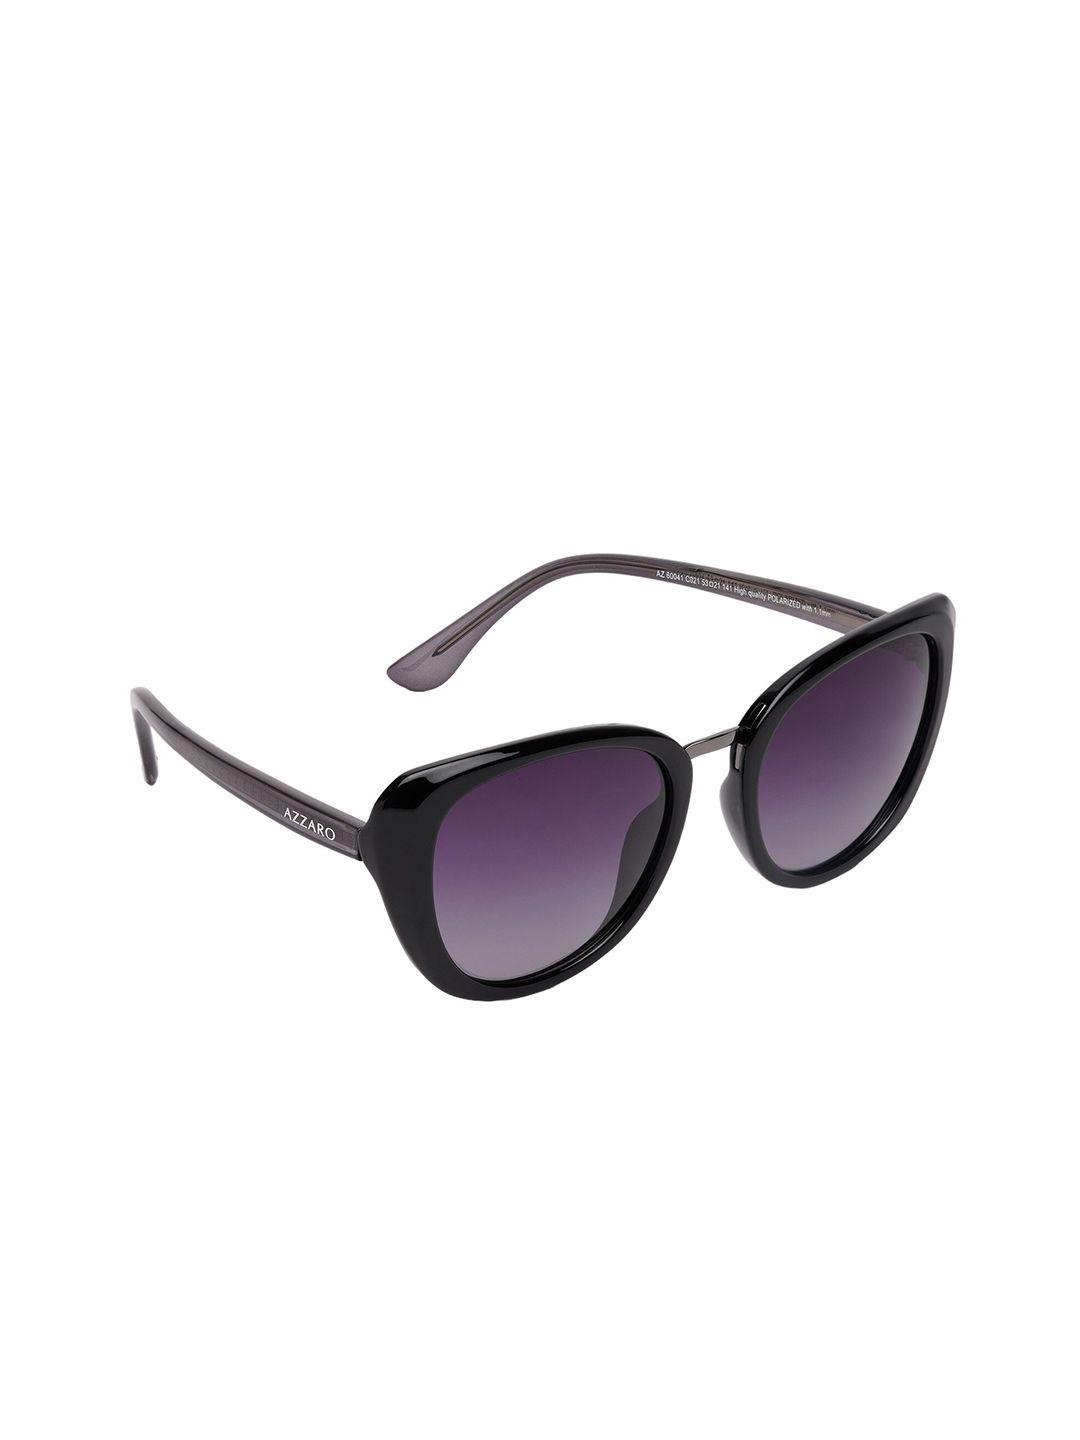 azzaro-women-round-sunglasses-with-uv-protected-lens